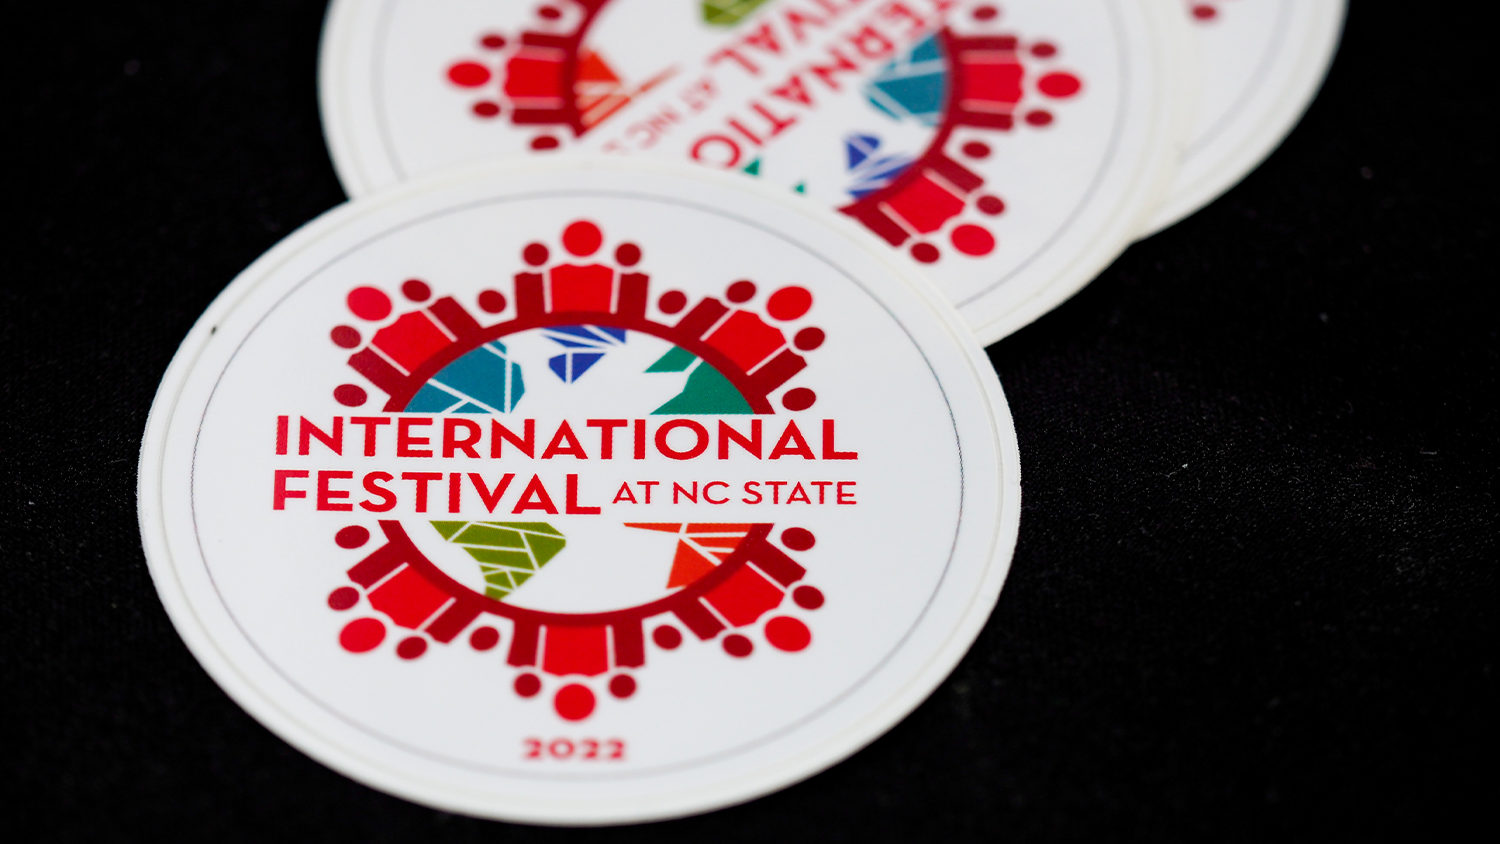 International Festival sticker on black table cloth